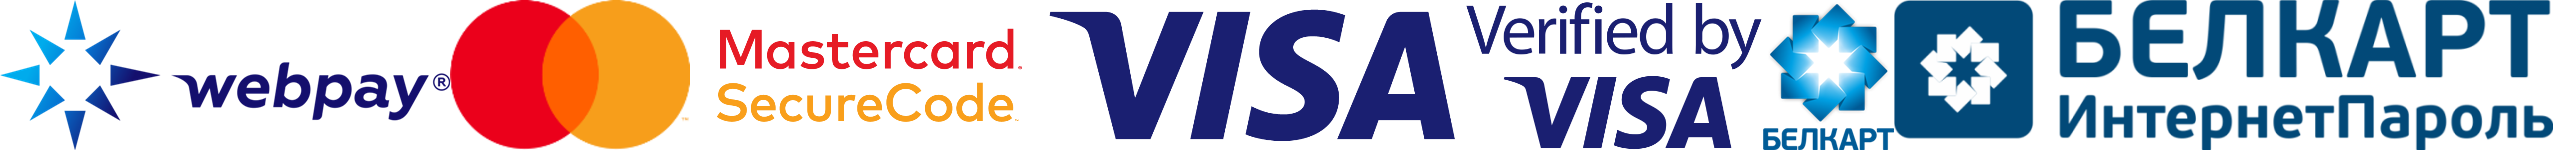 pay-logo